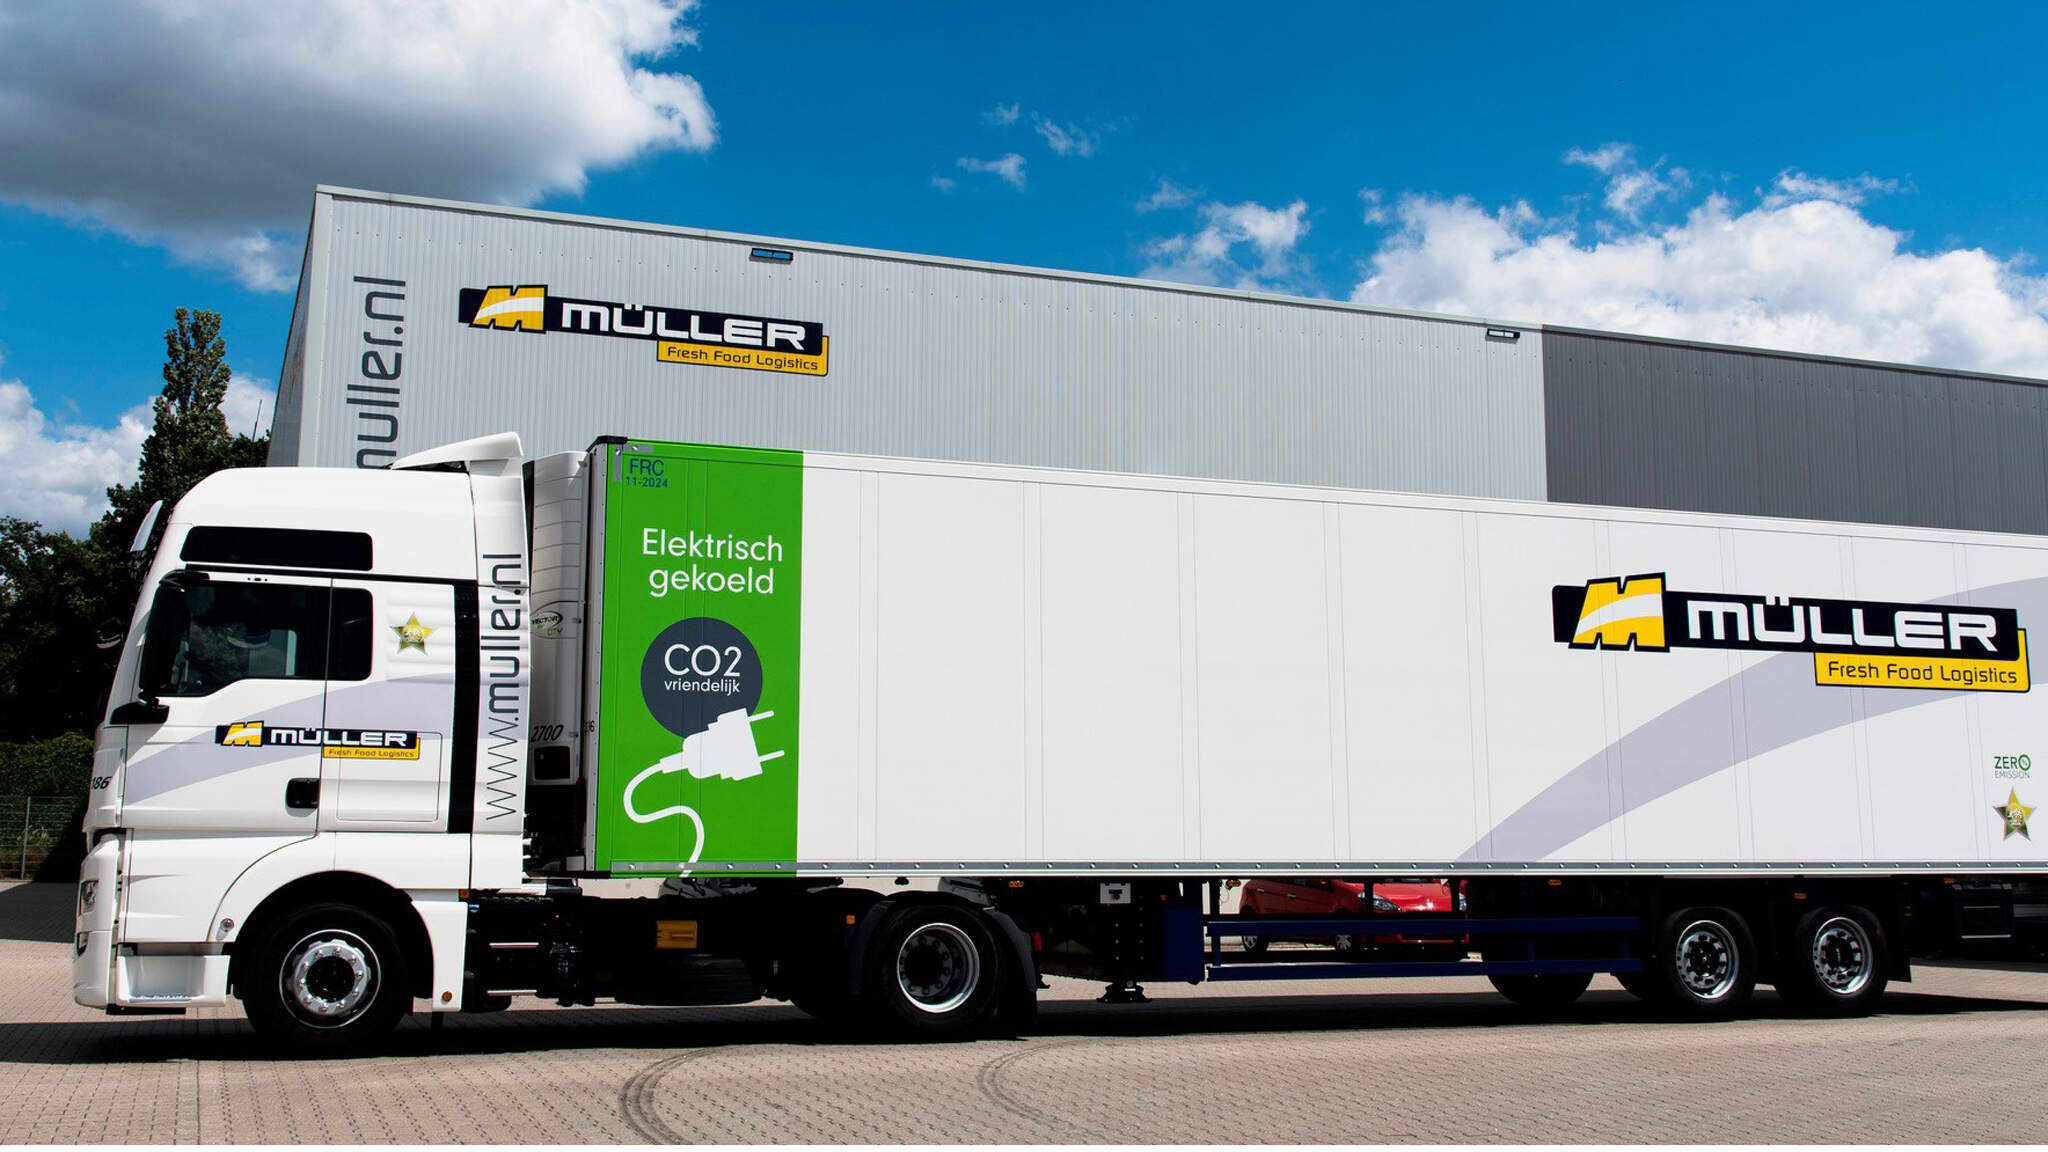 DACHSER acquires Dutch food logistics provider Müller